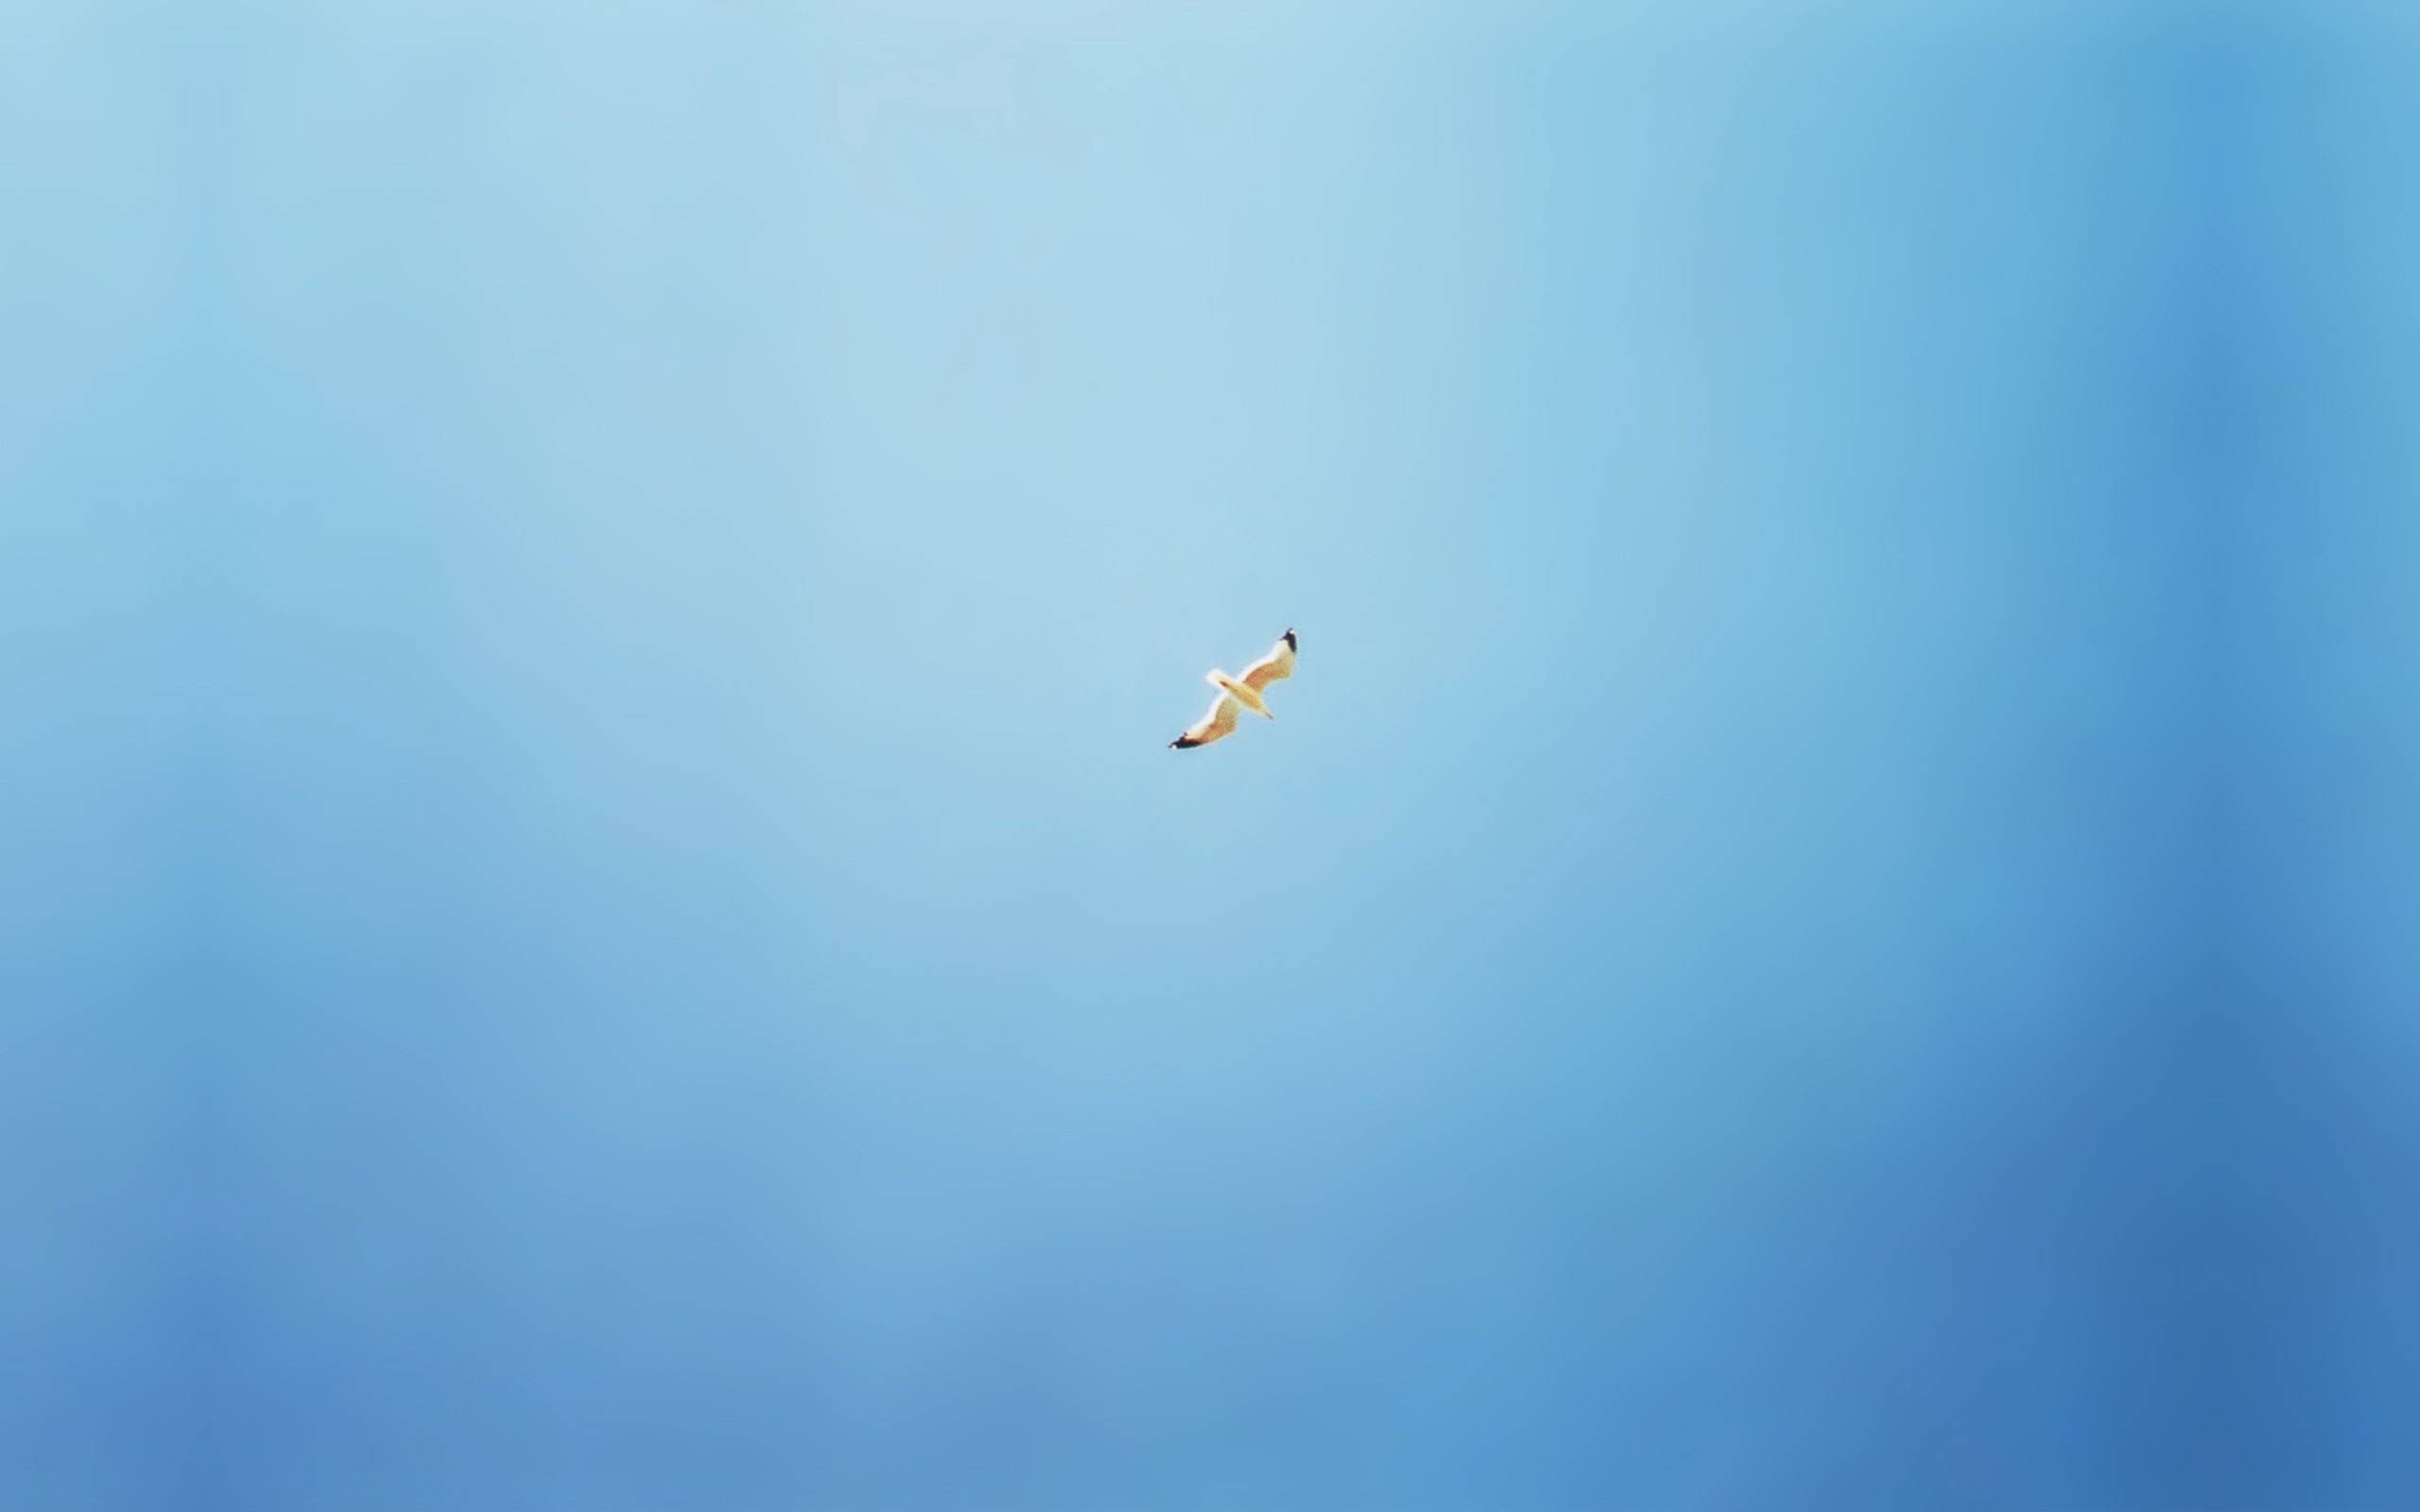 чайка в небе, минимализм, голубой фон, качественные обои, Gull in the sky, minimalism, blue background, high-quality wallpaper